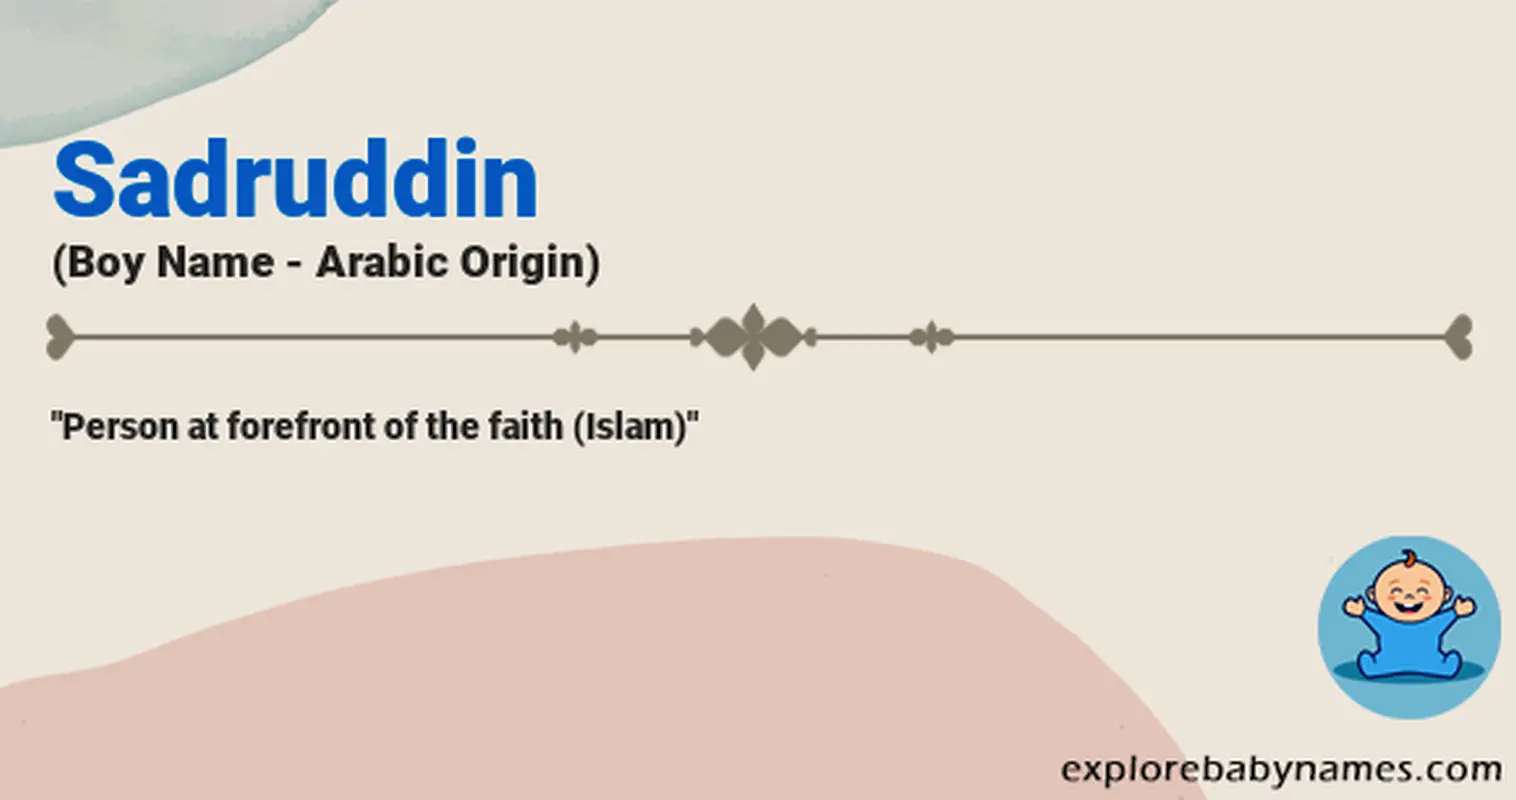 Meaning of Sadruddin